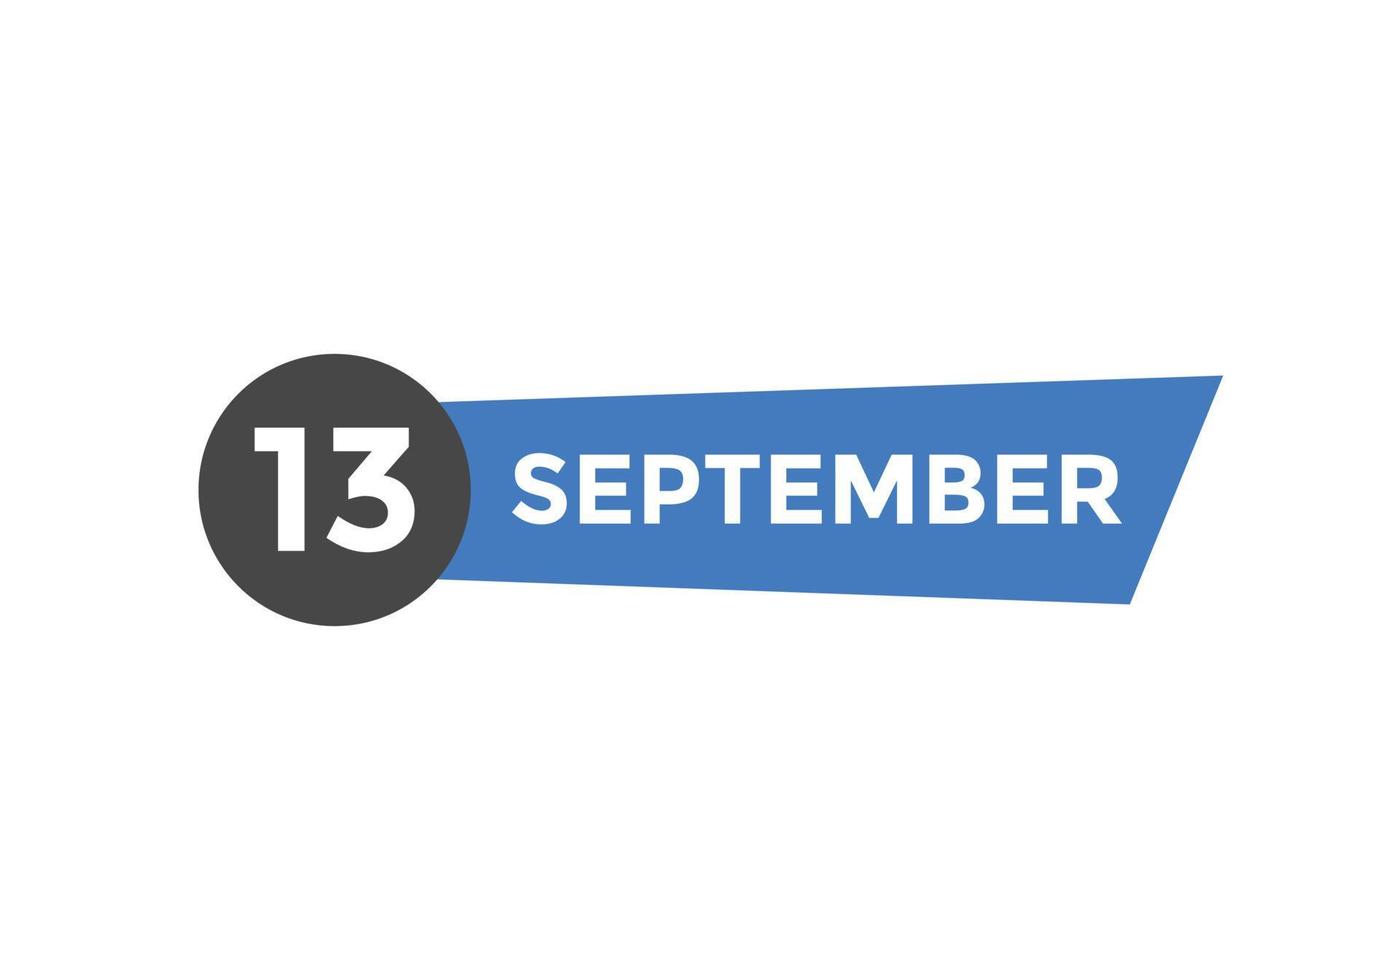 september 13 calendar reminder. 13th september daily calendar icon template. Calendar 13th september icon Design template. Vector illustration